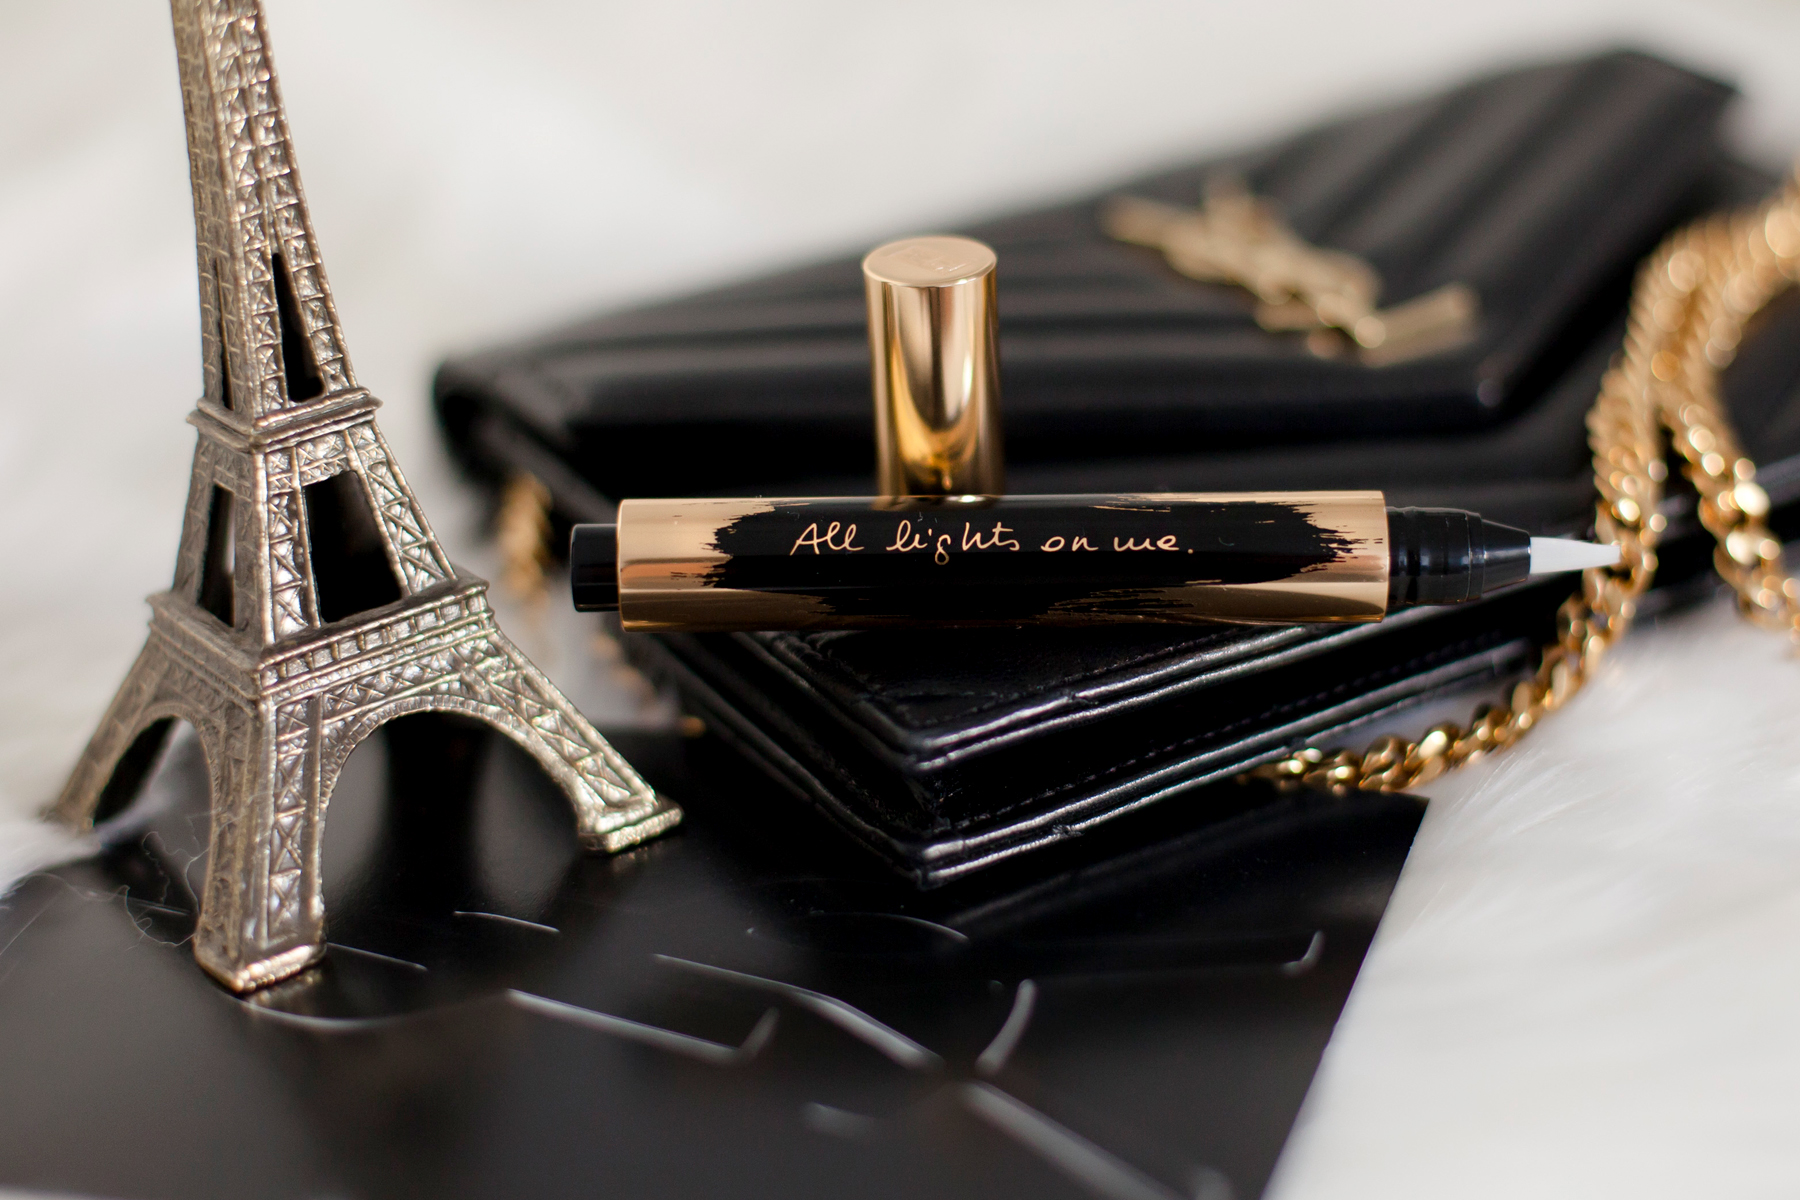 YSL Yves Saint Laurent Paris Beauty Beaute New Products Launch Lipstick Mascara Gold Eyelashes chic paris makeup beautyblogger cats & dogs blog ricarda schernus berlin dusseldorf blogger 4